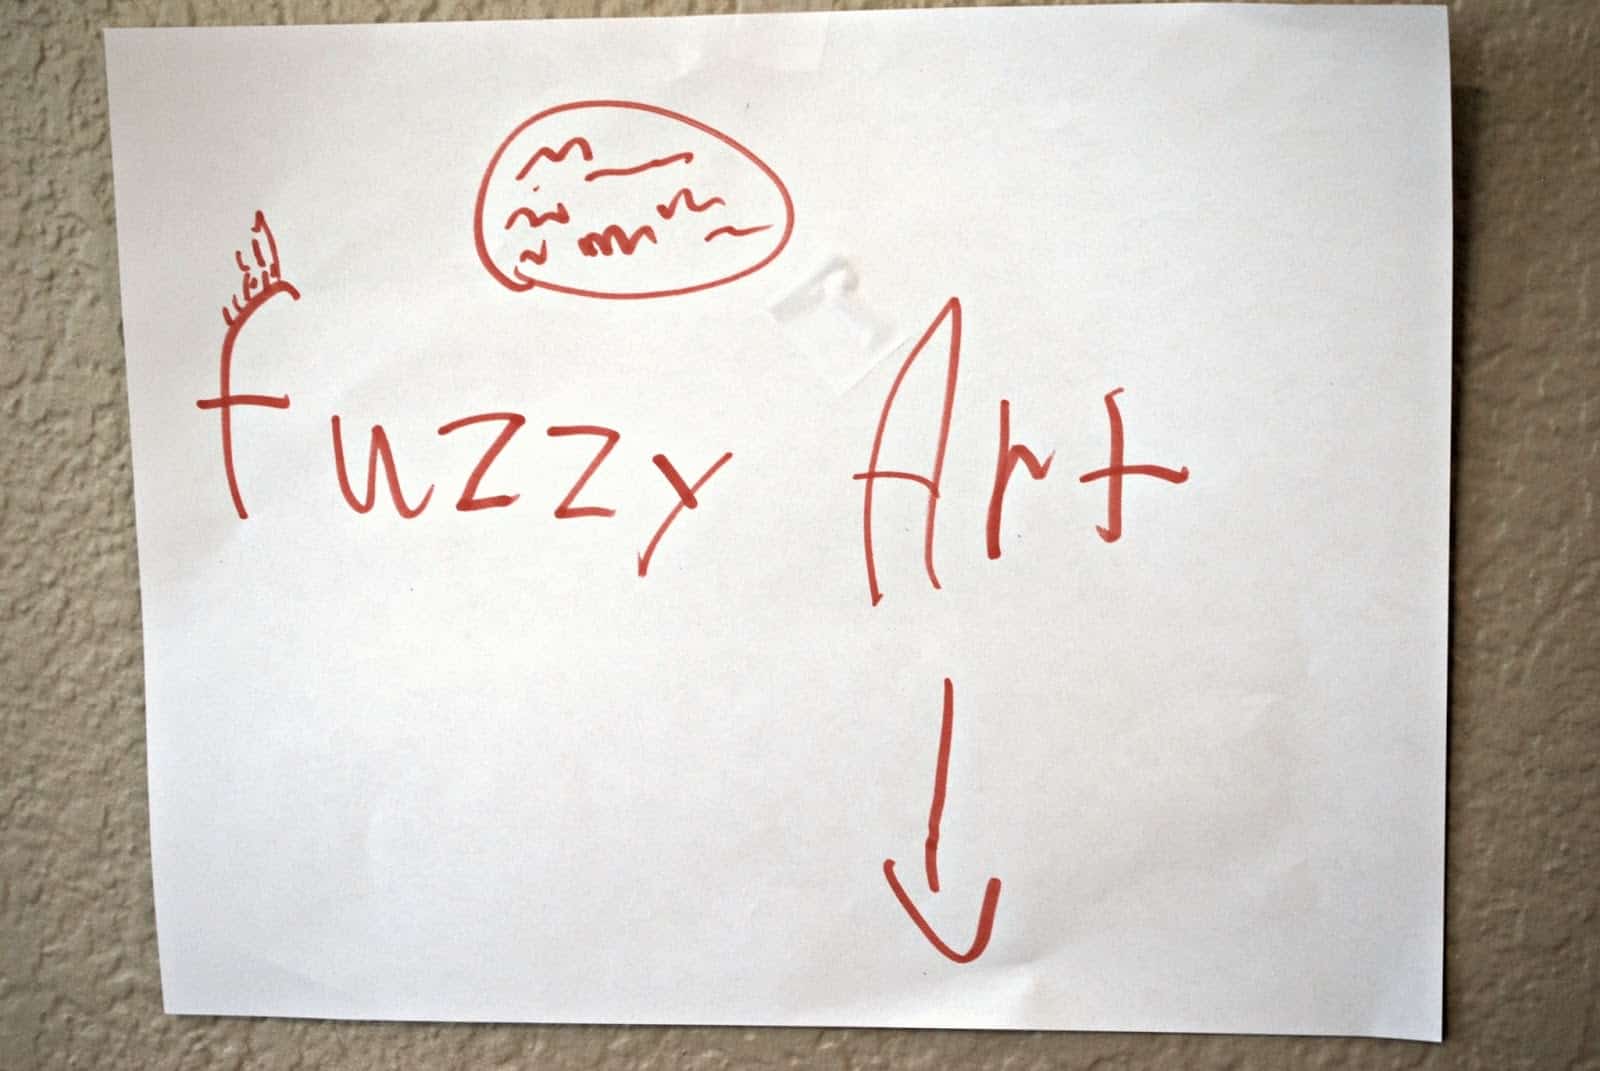 fuzzy art sign